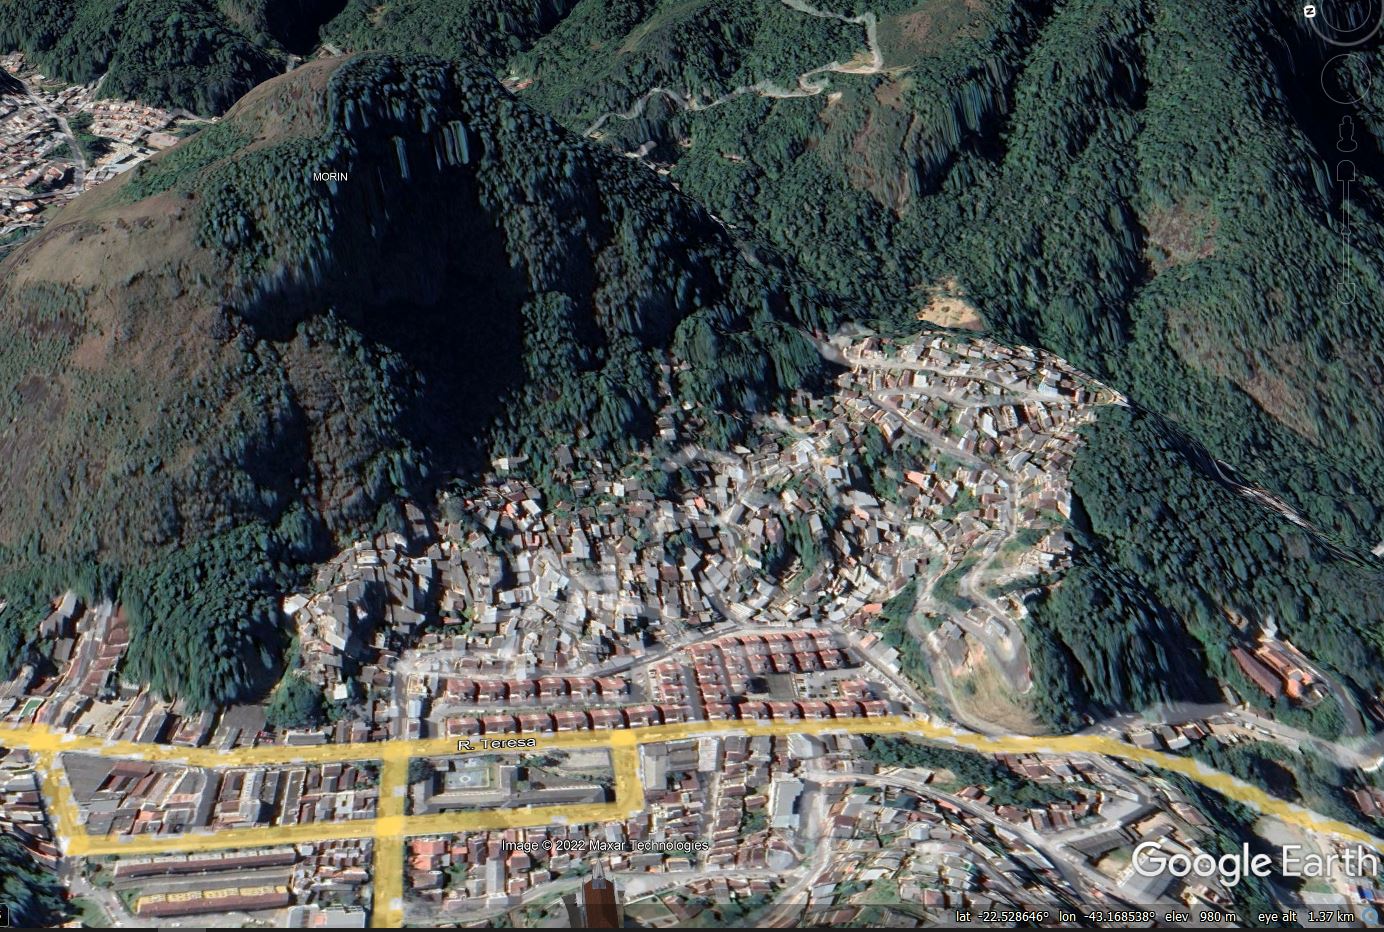 Google Earth image of the site of the landslide at Morro da Oficina in Petropolis.